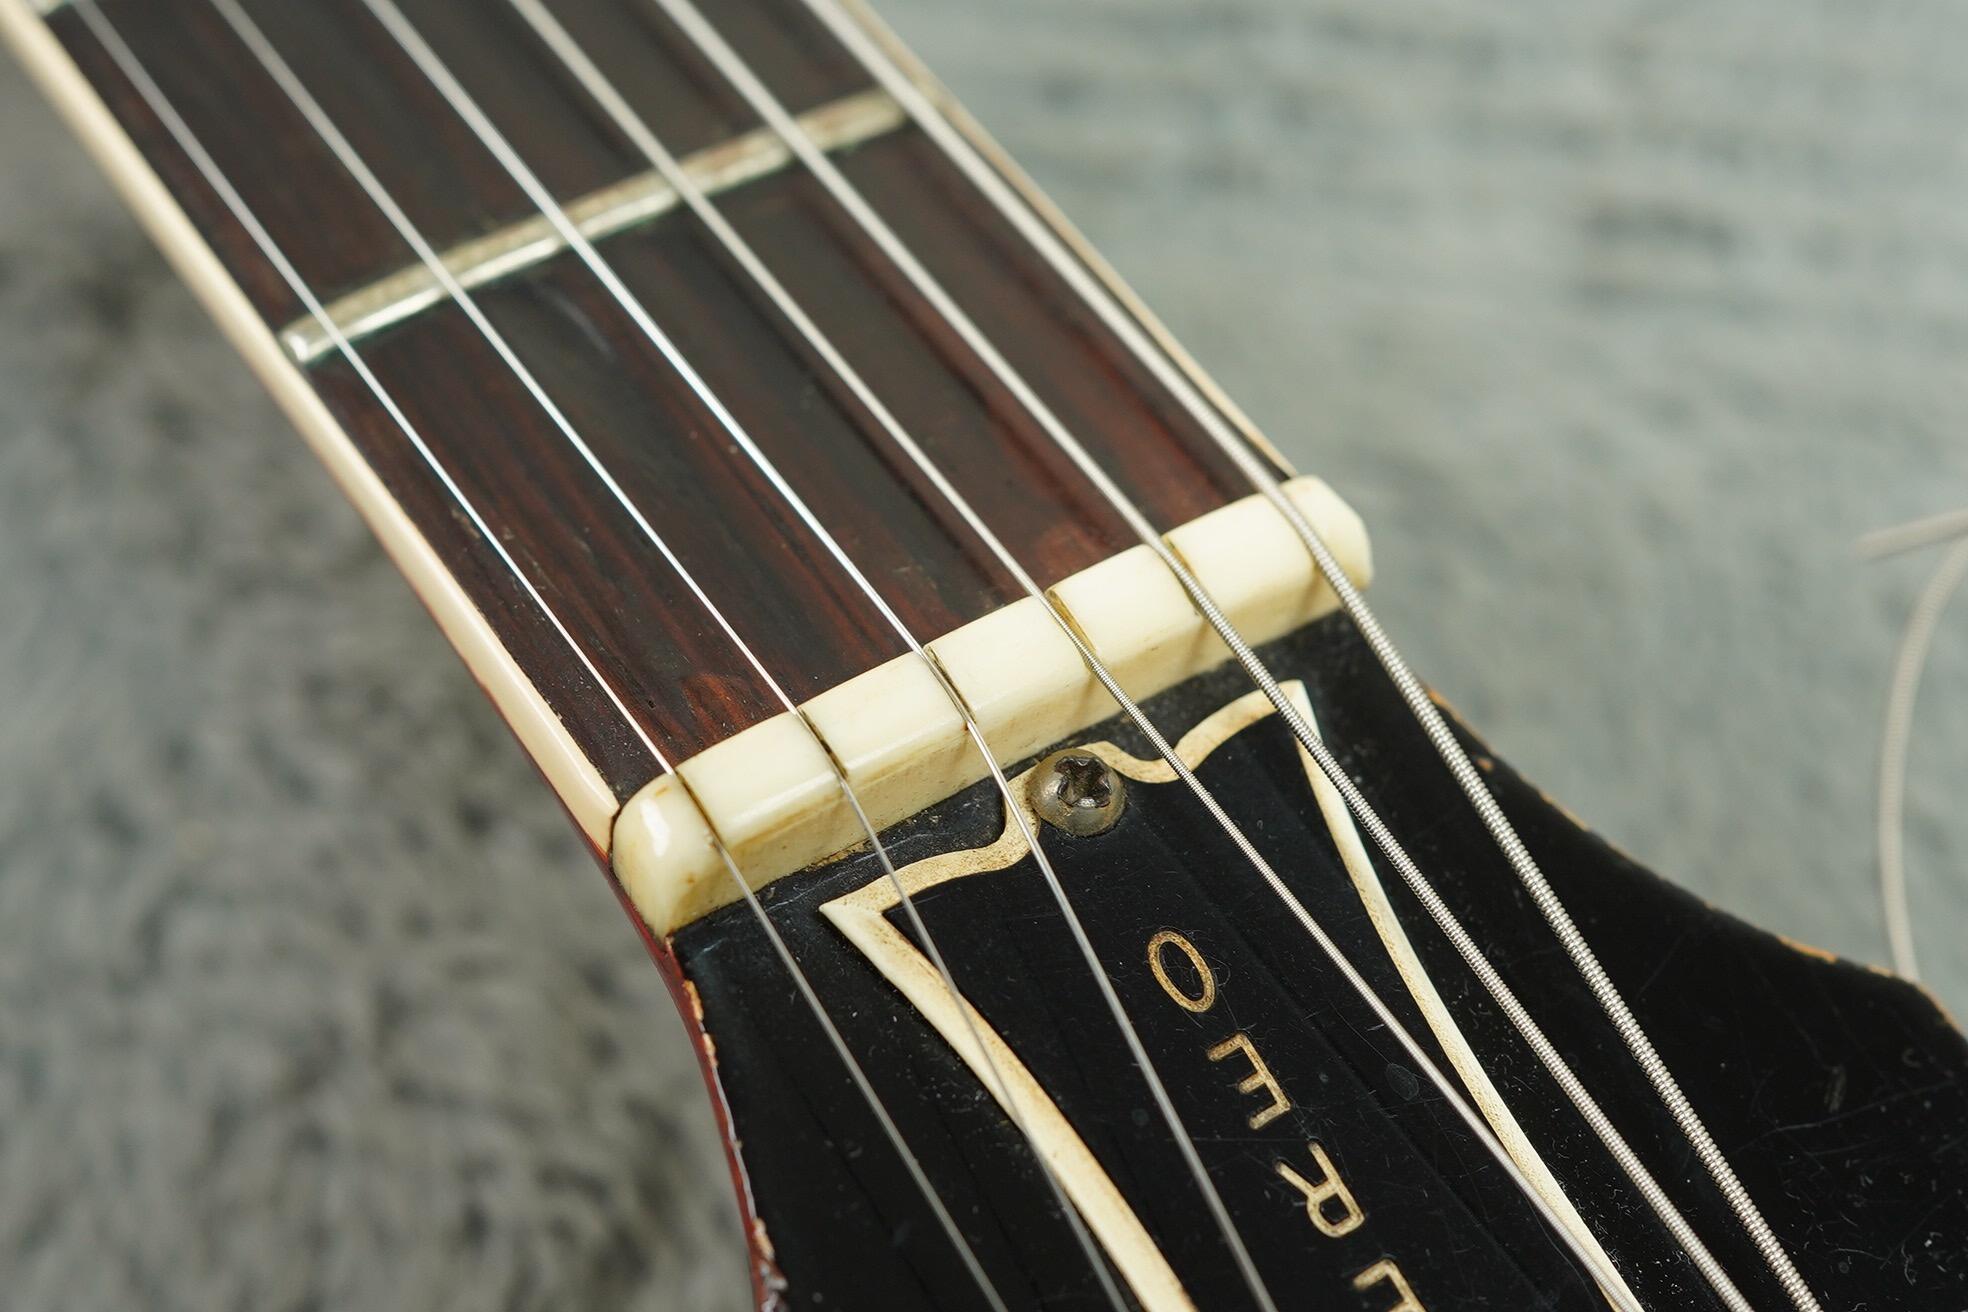 1964 Gibson ES-345 TDC